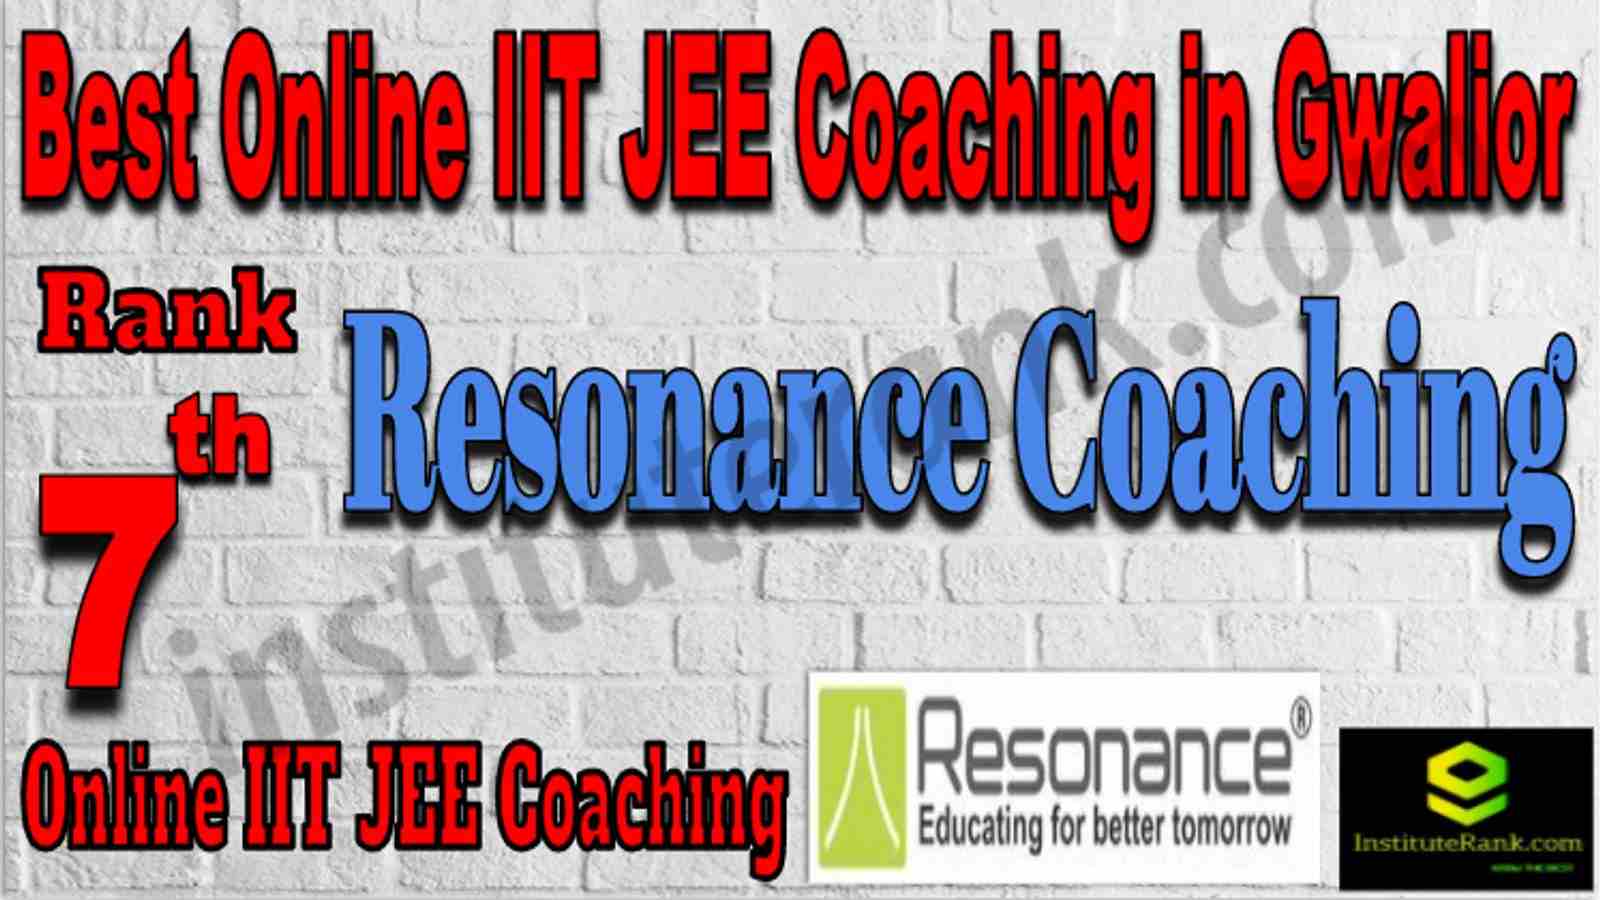 Rank 7 Best Online IIT JEE Coaching in Gwalior